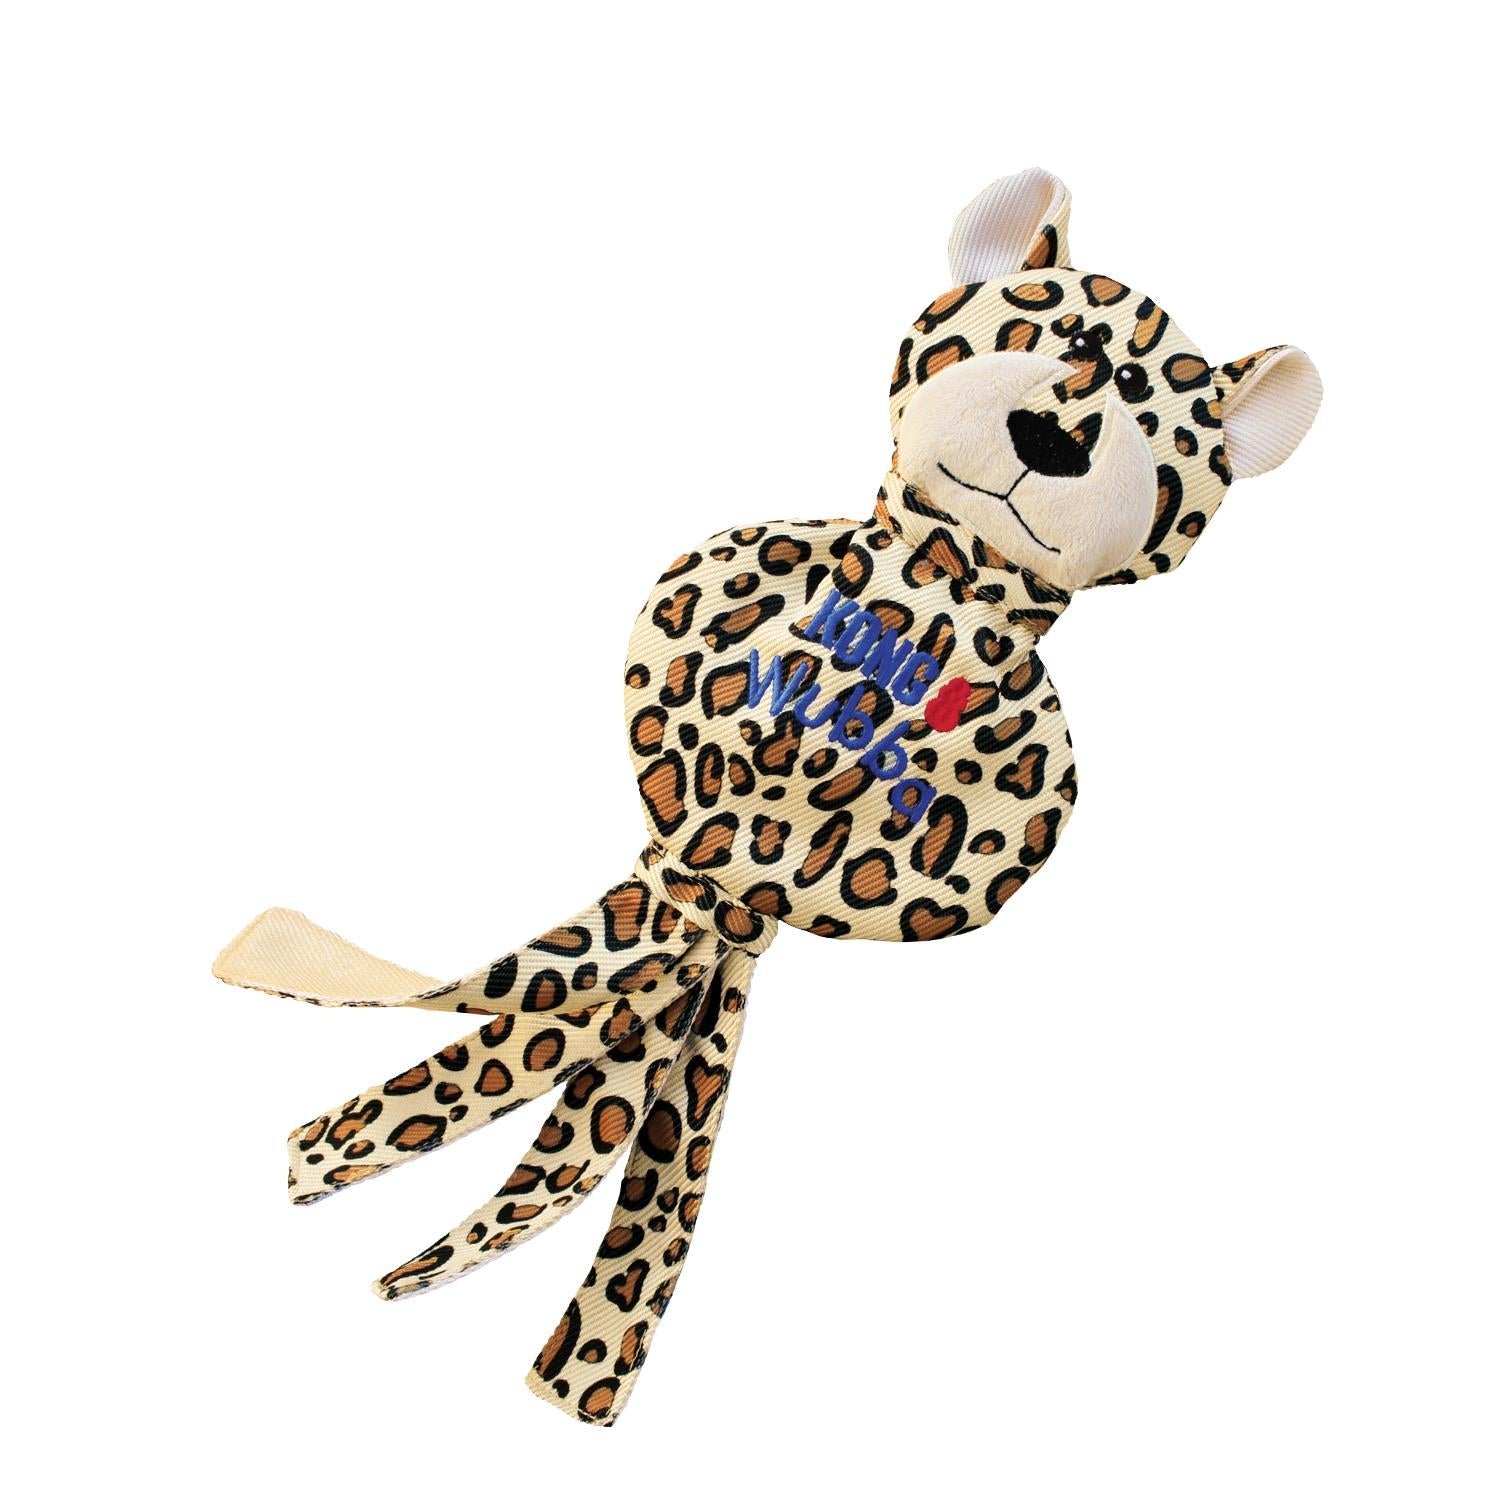 KONG juguete perro wubba leopardo 15x40cm